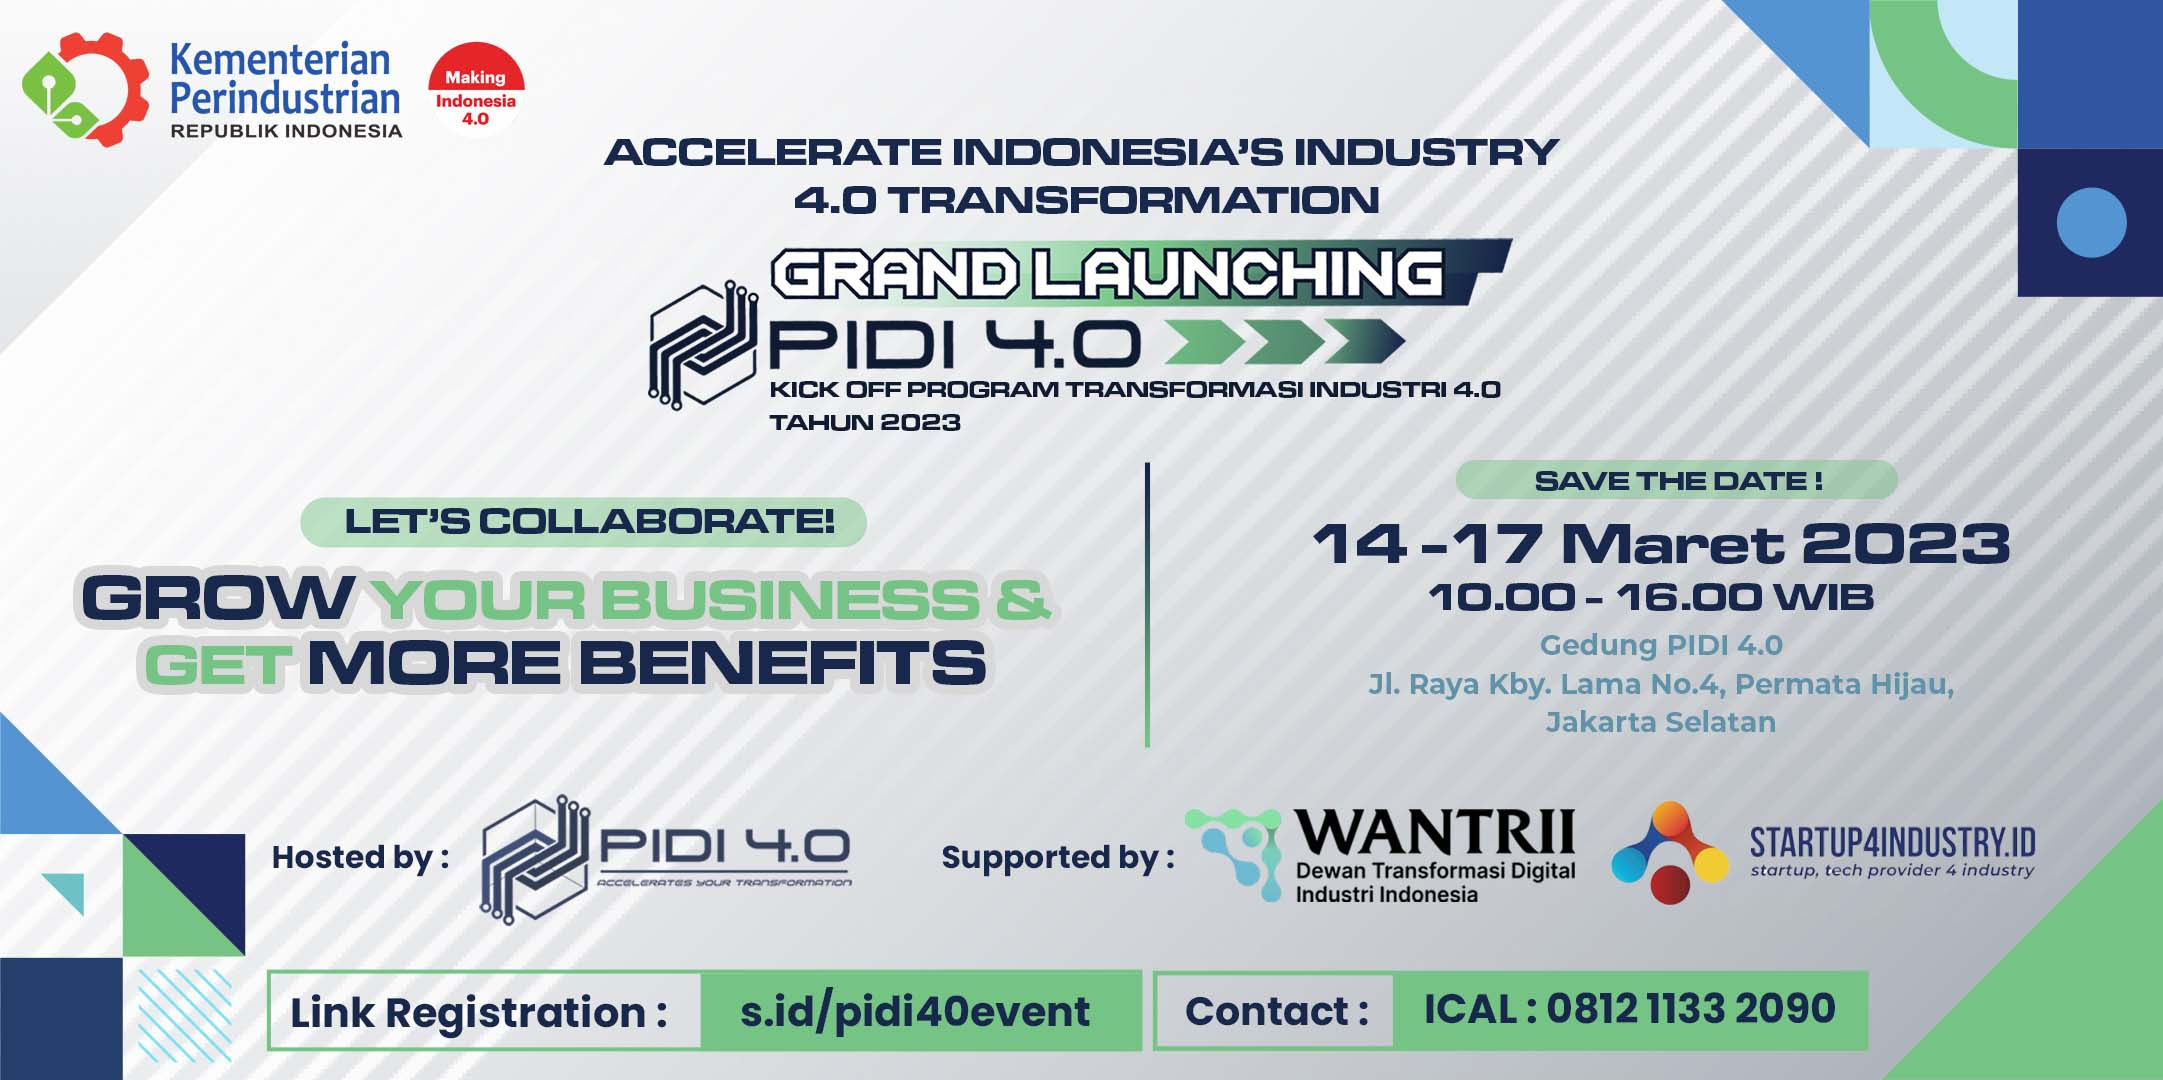 Undangan Grand Launching PIDI 4.0